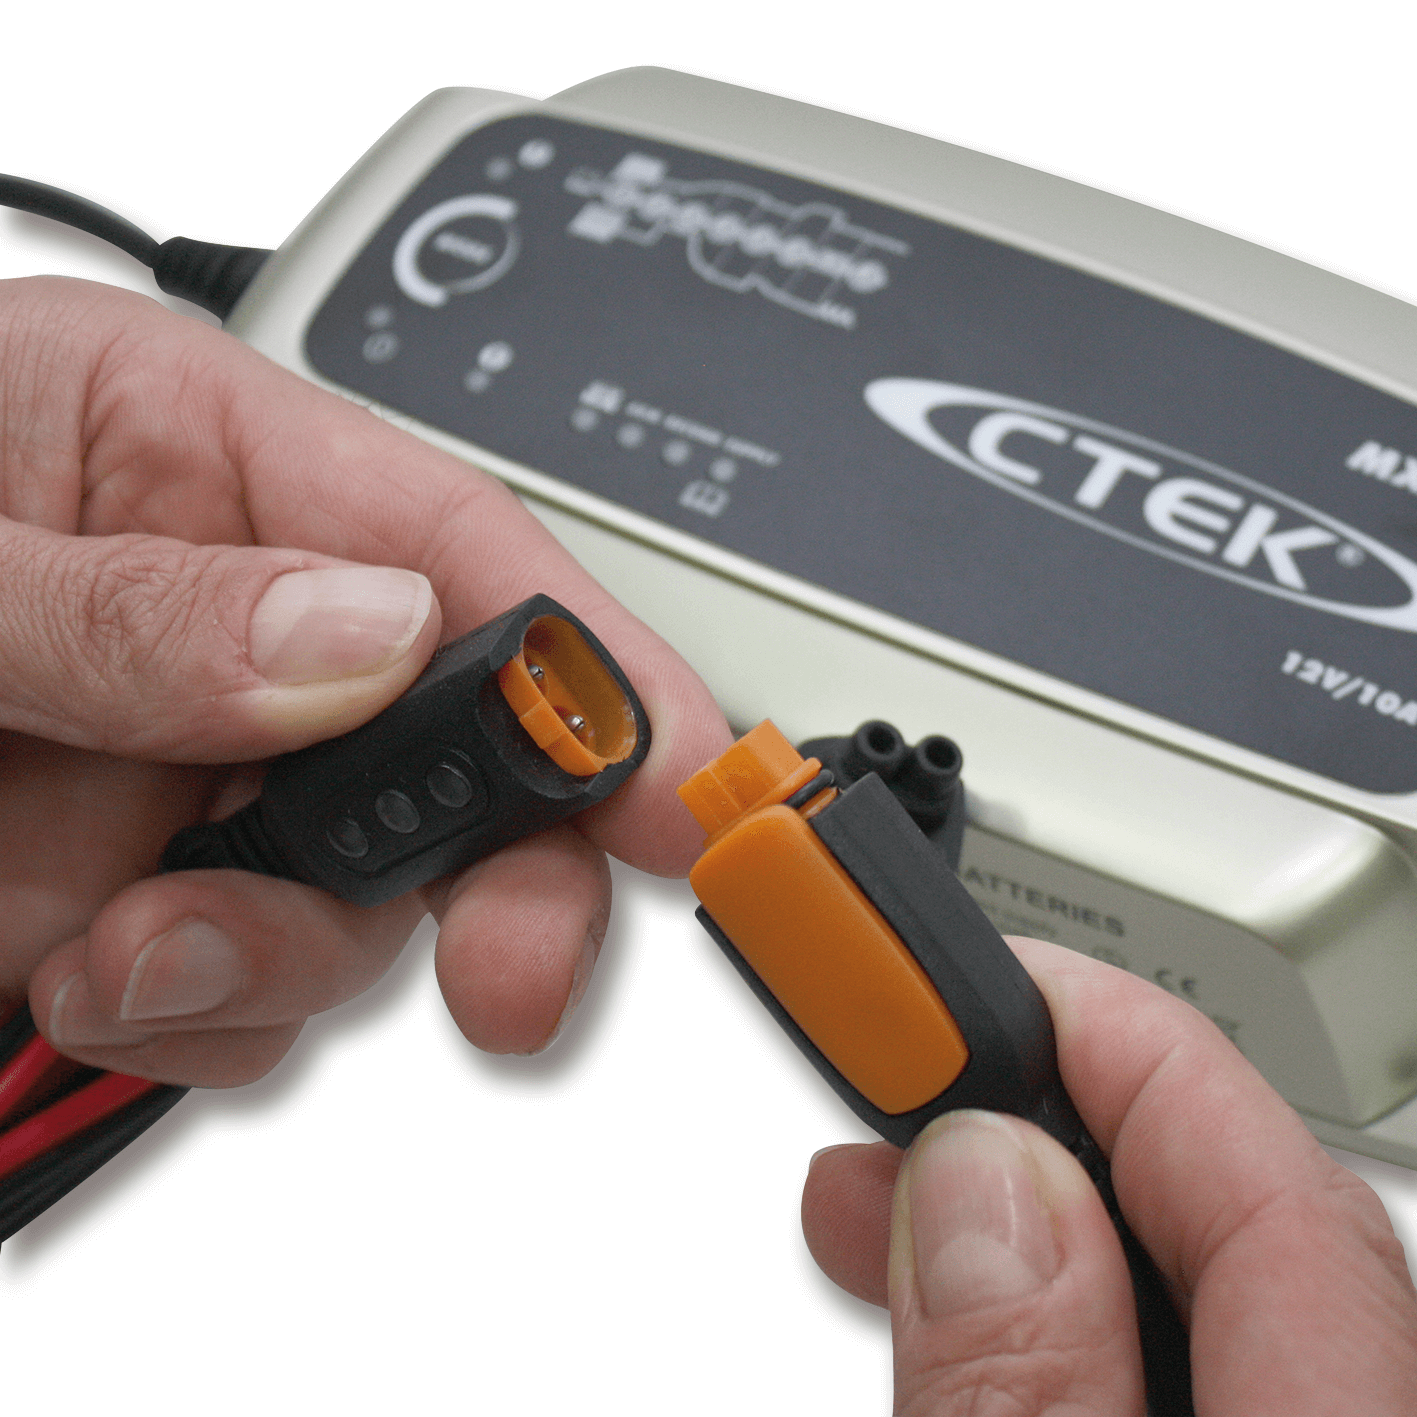 CTEK Ladekabel mit Klemmen und LED Batterie Statusanzeige - CTEK Batterie  Ladege